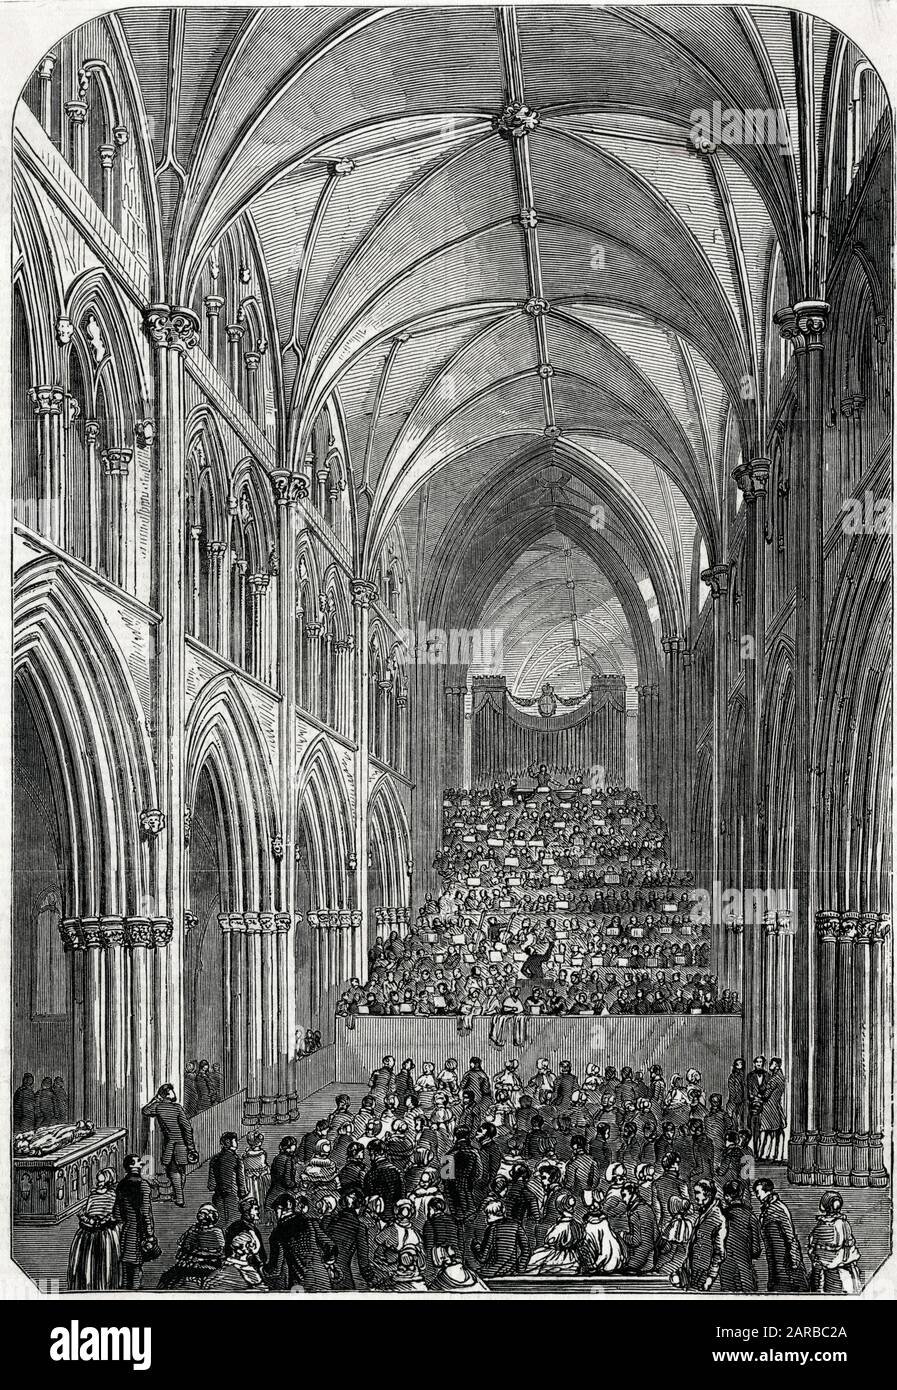 El festival de música "Three Choirs" se celebra en la catedral de Worcester. Fecha: 1848 Foto de stock